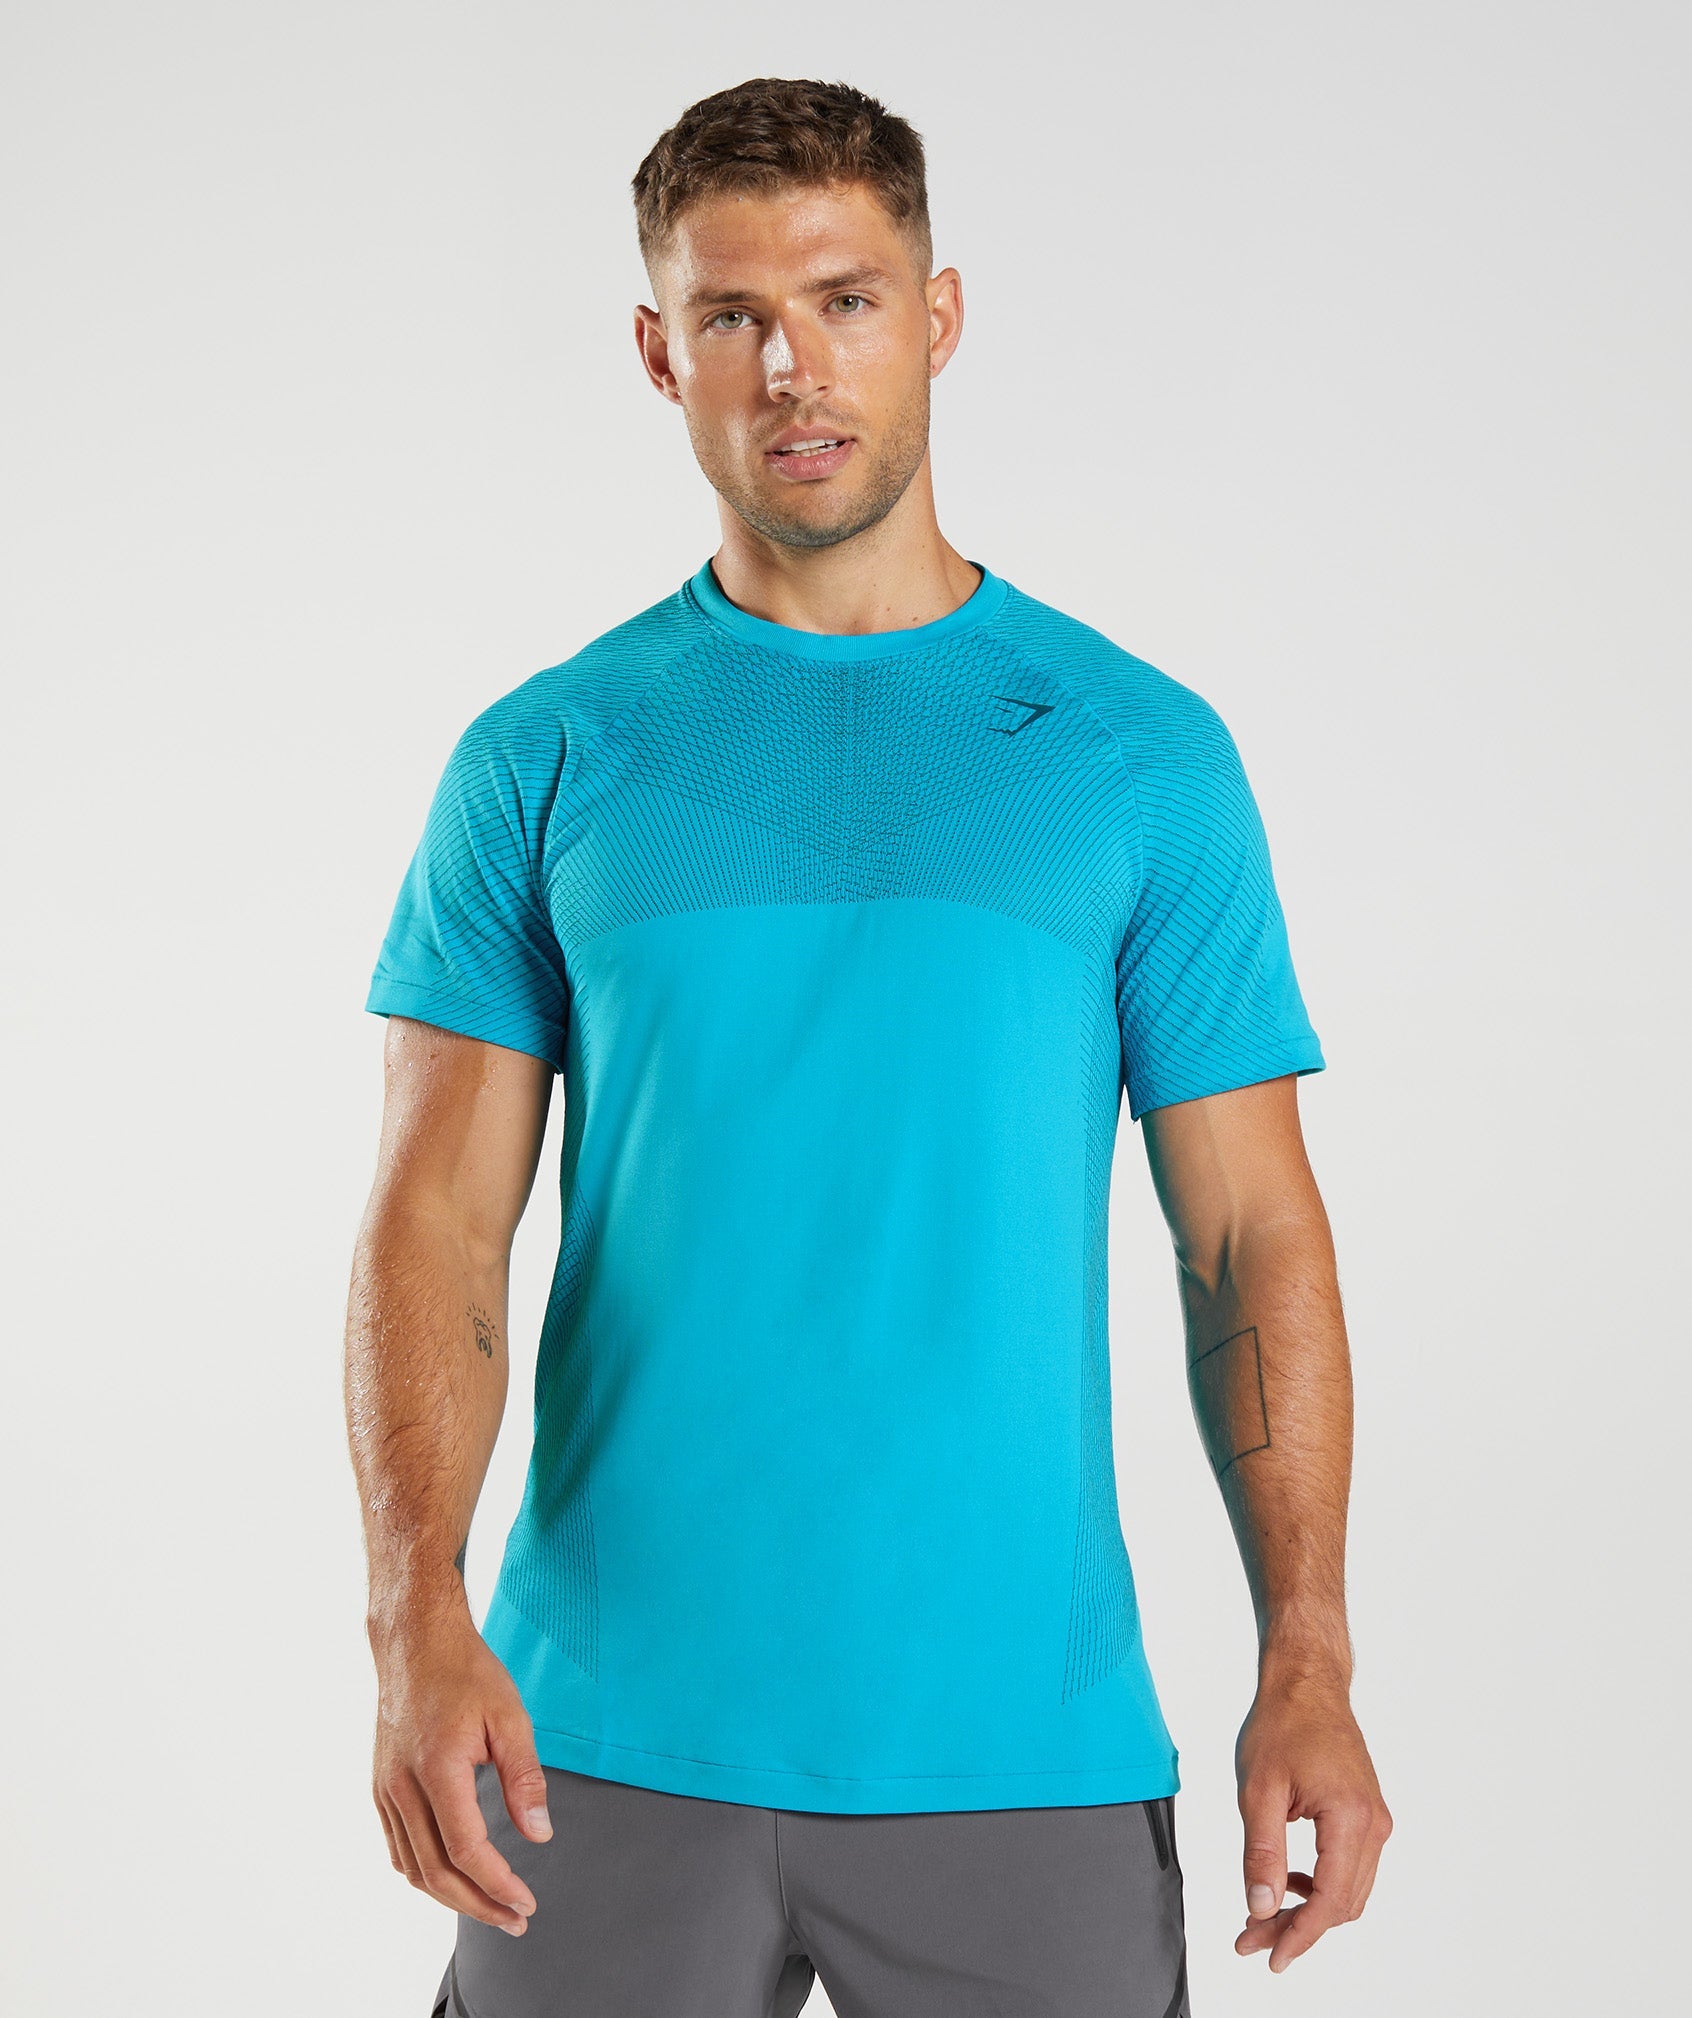 Apex Seamless T-Shirt in Shark Blue/Atlantic Blue - view 1